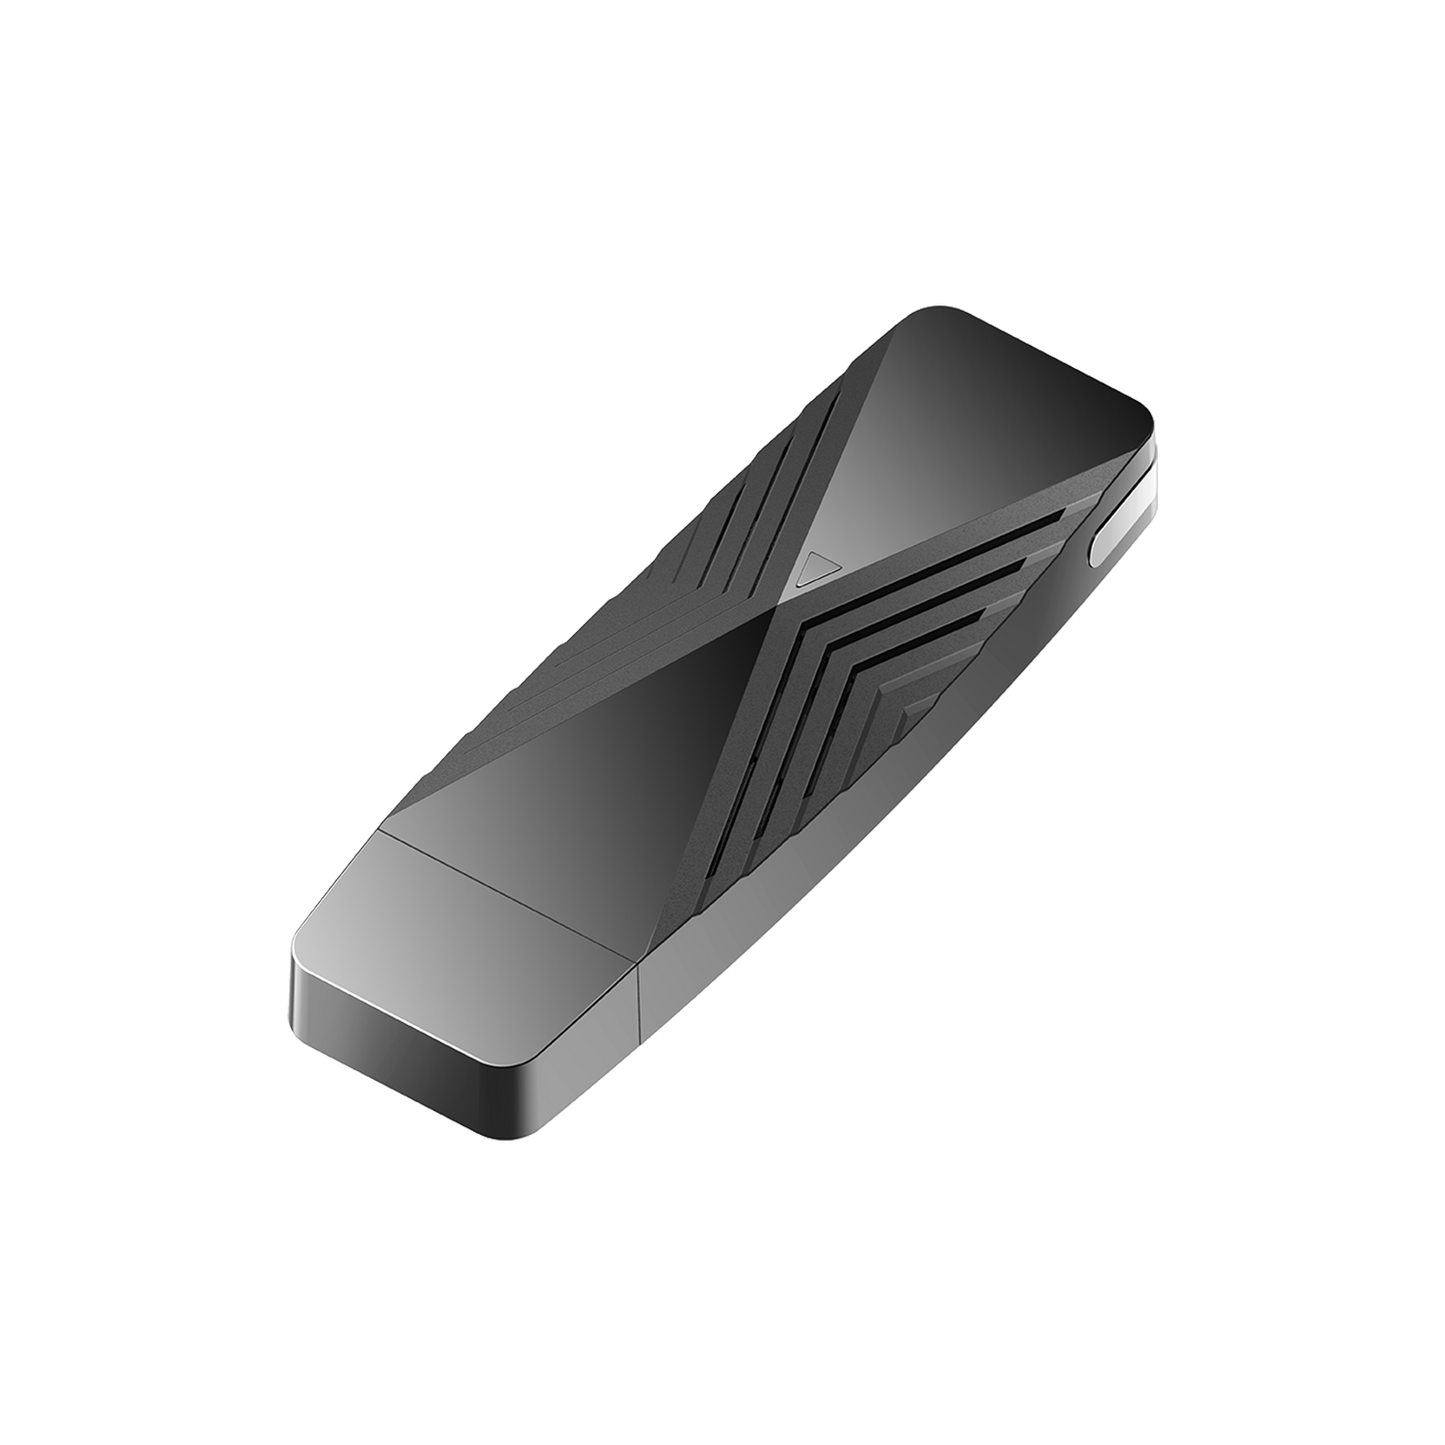 DWA-X1850 | AX1800 Wi-Fi 6 USB Adapter with Cradle